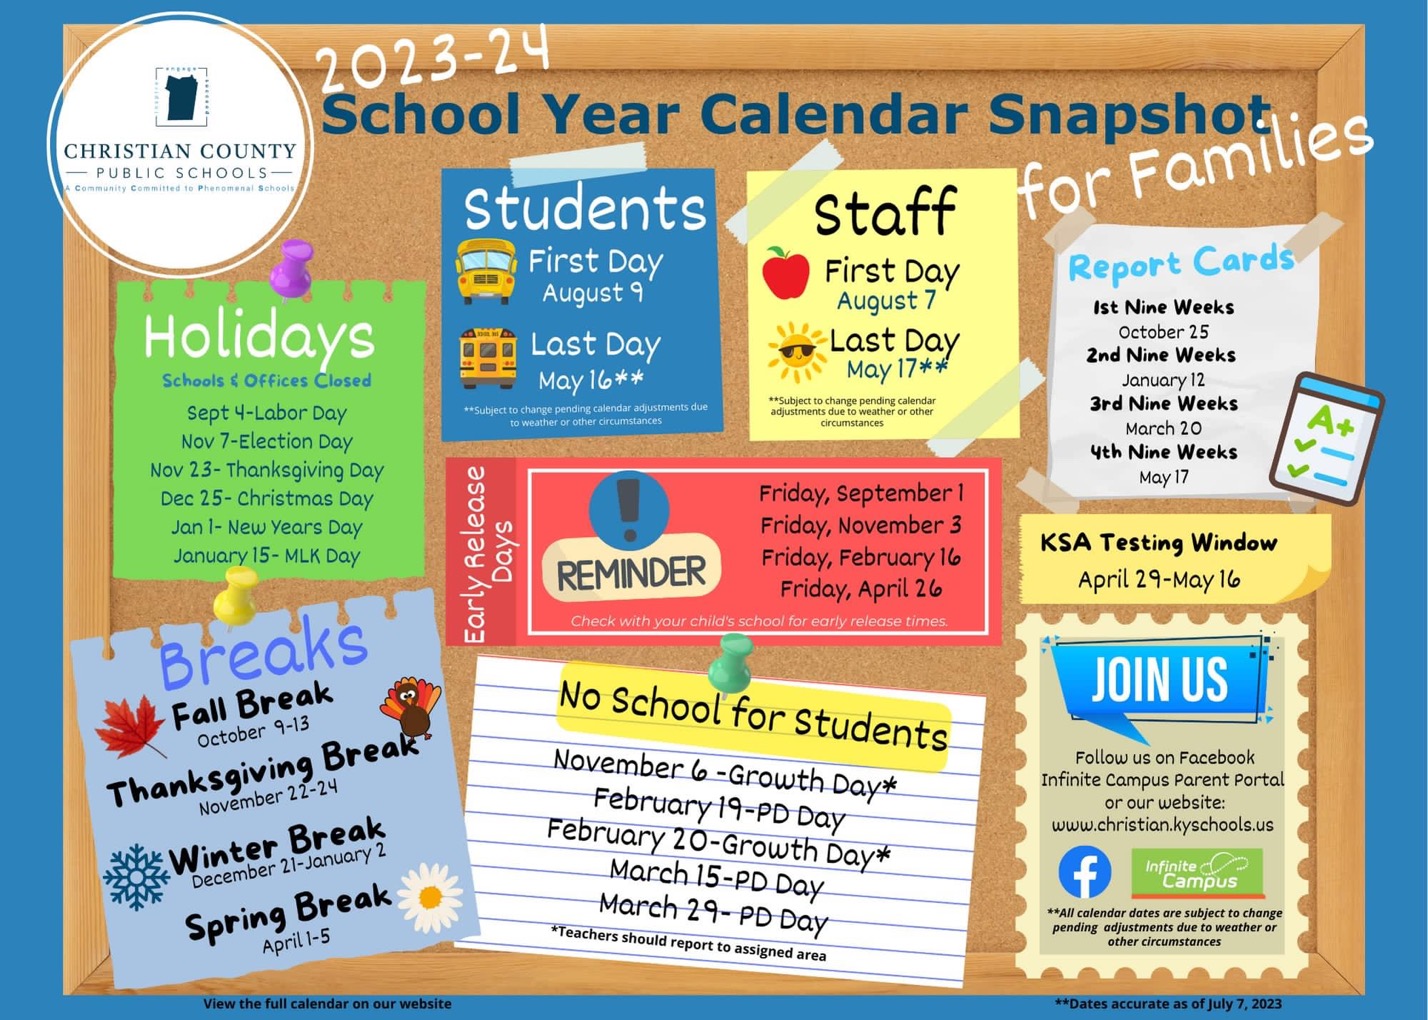 School Year Calendar Snapshot